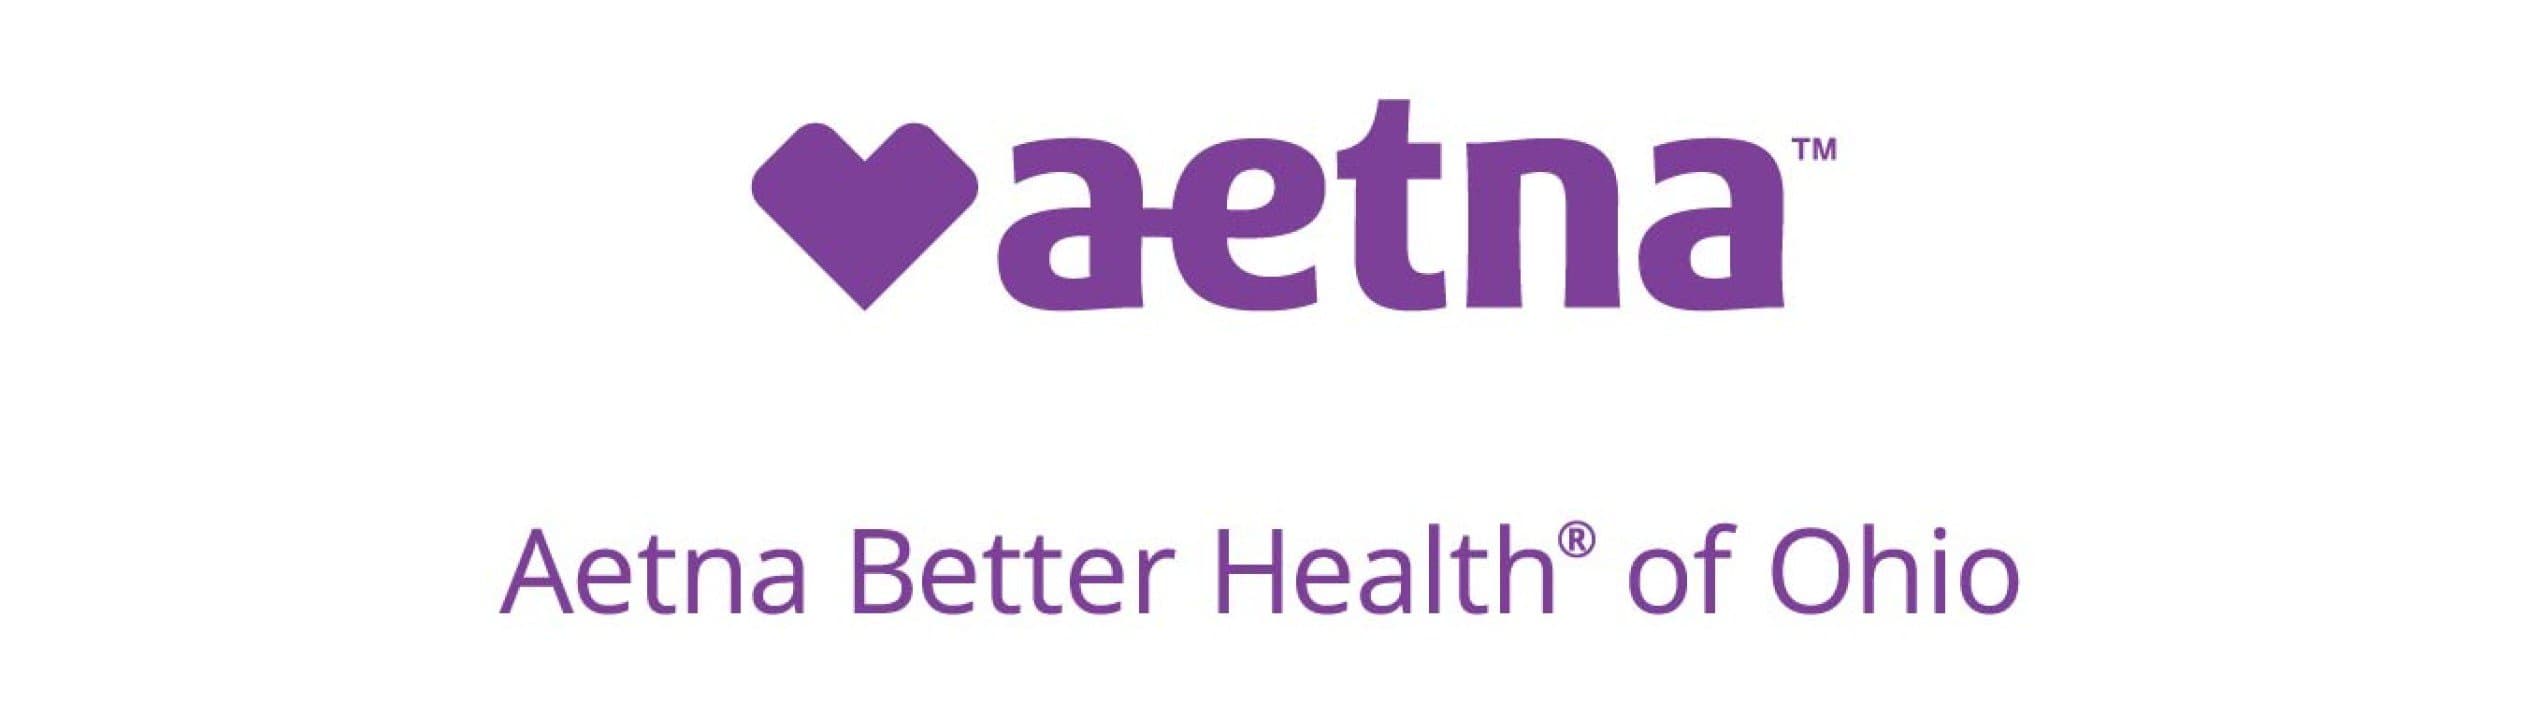 Aetna Better Health of Ohio